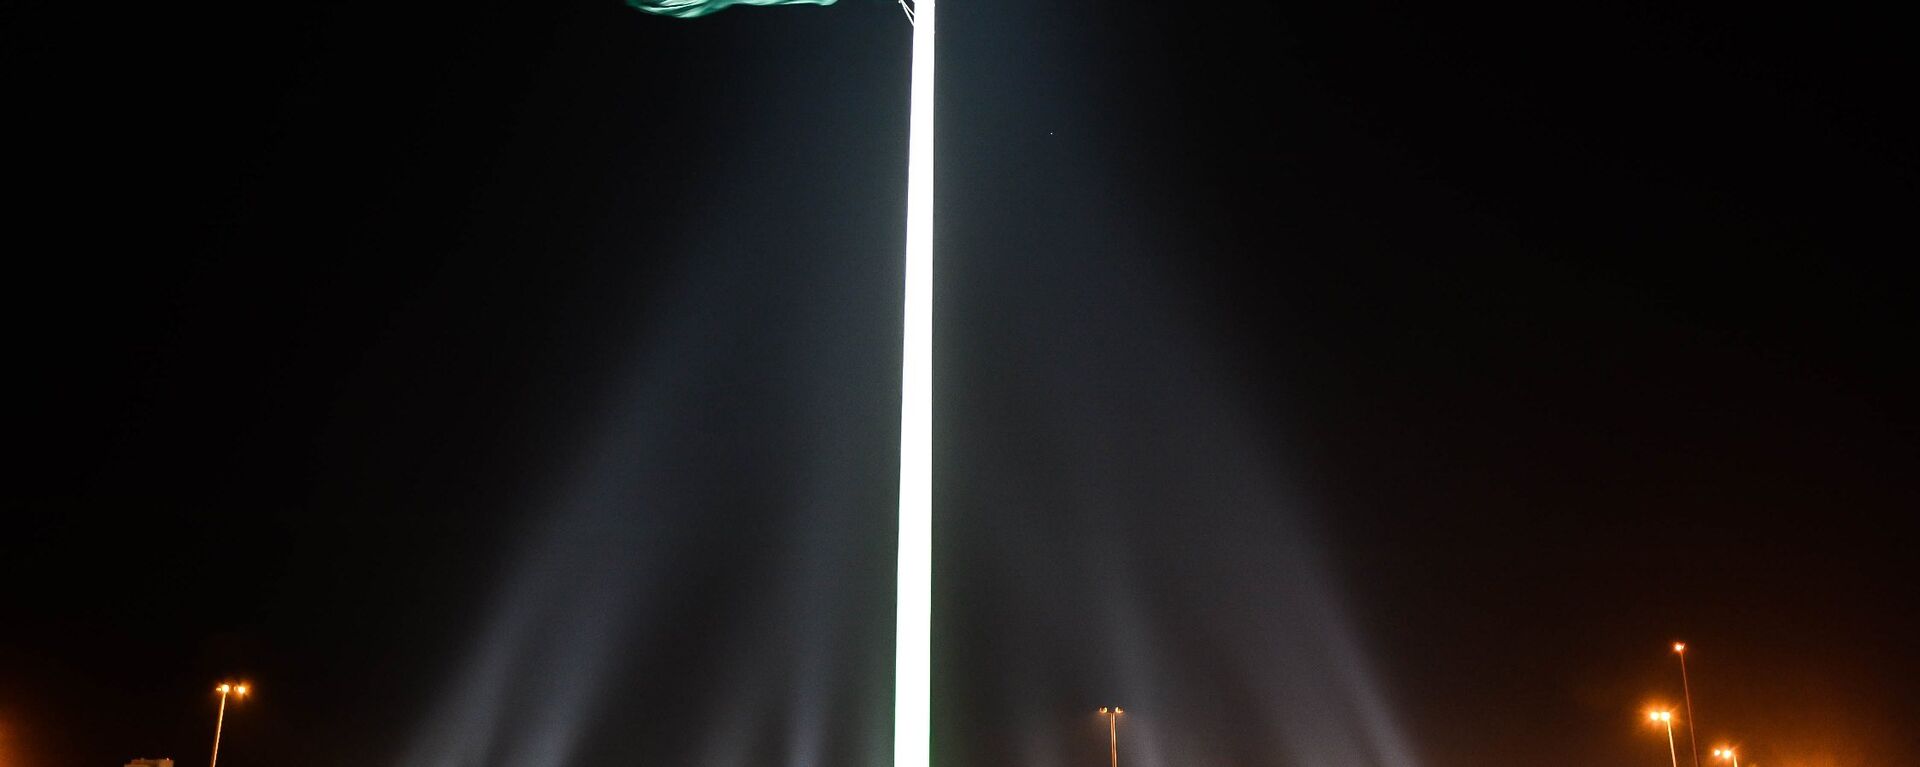 La bandera de Arabia Saudí - Sputnik Mundo, 1920, 29.10.2021